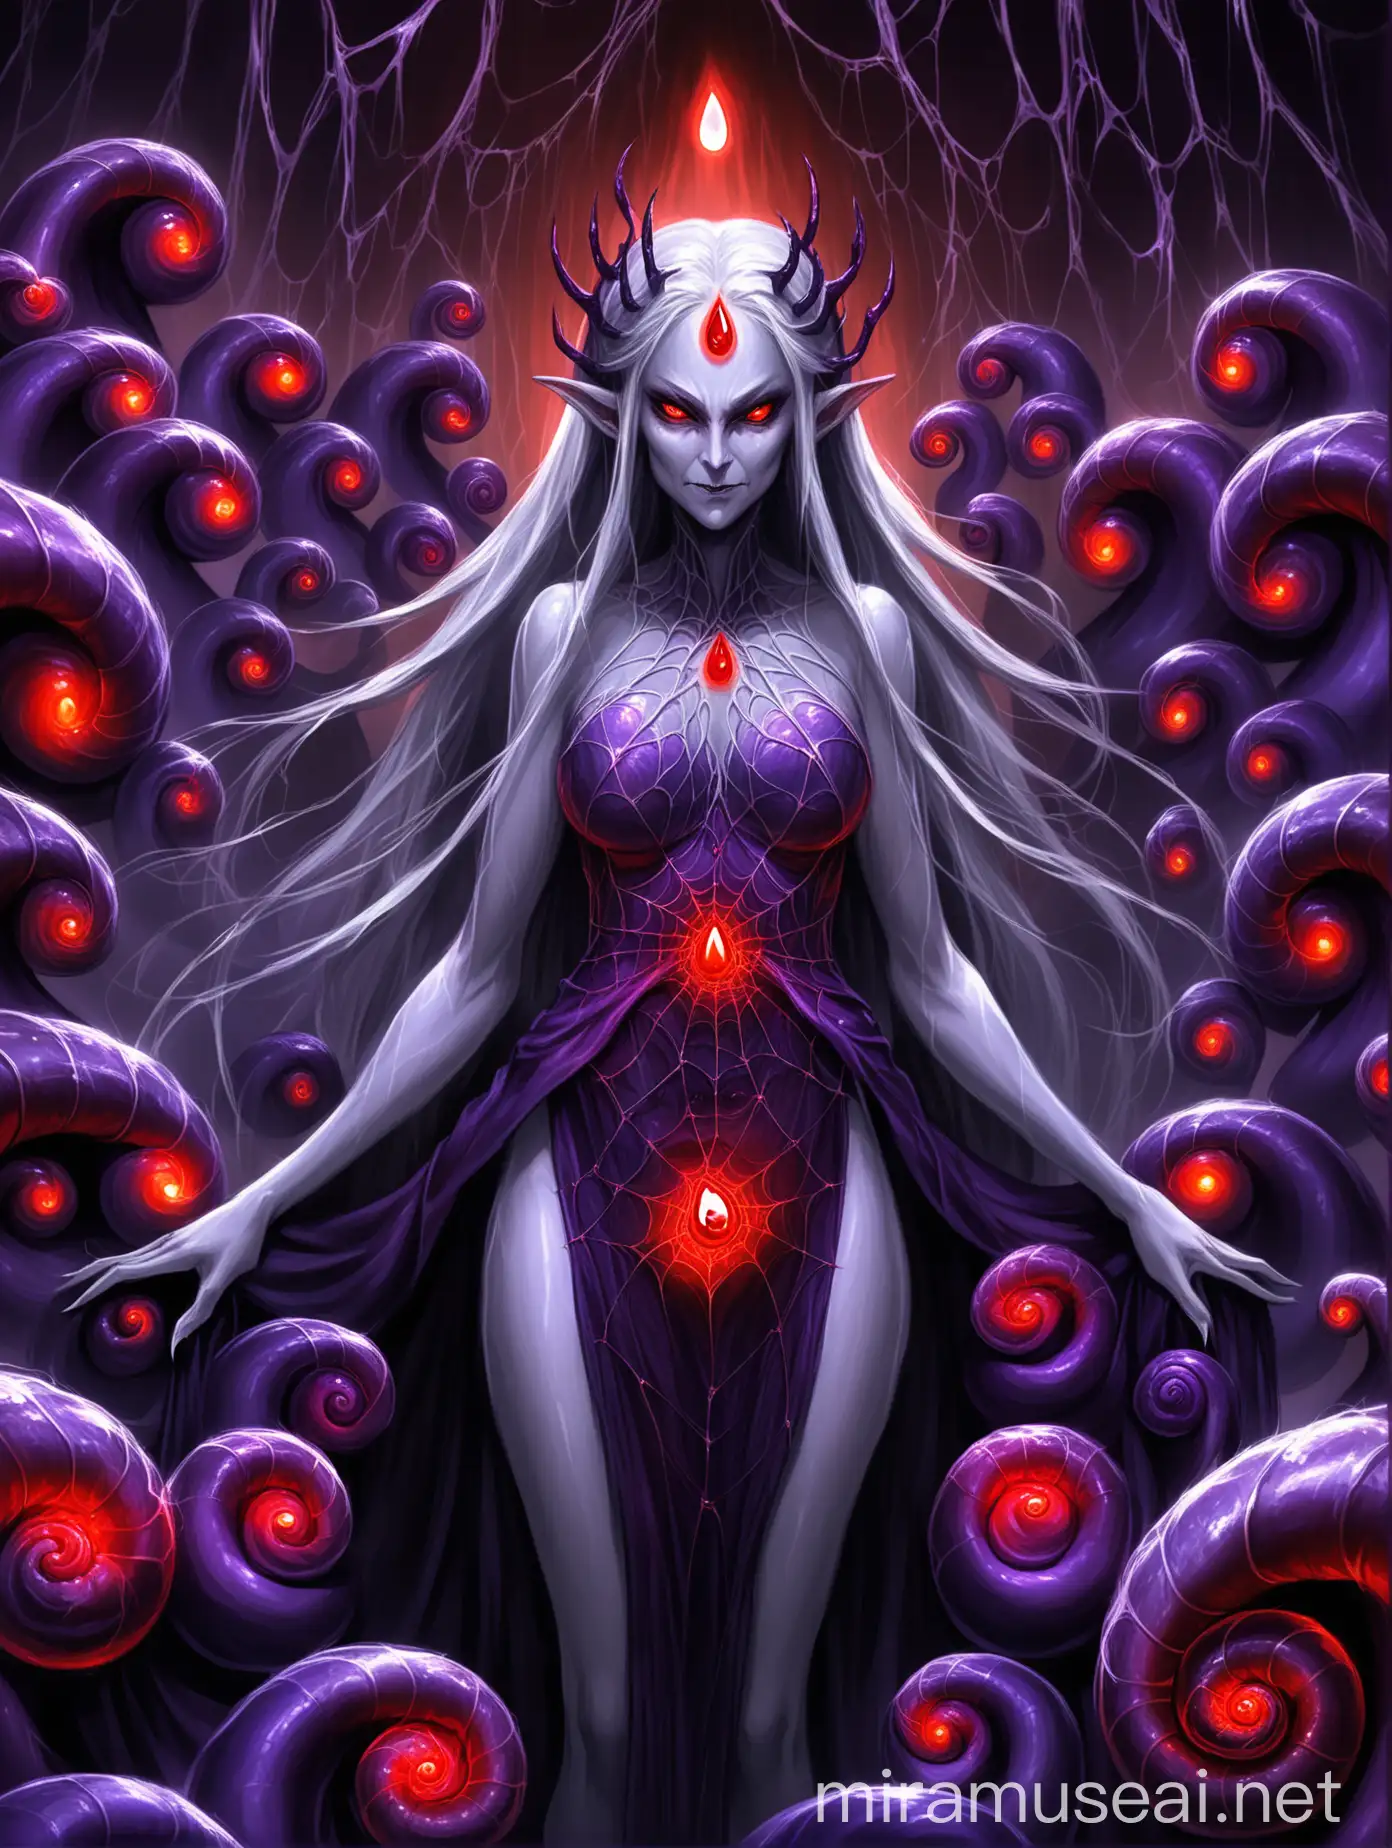 Malevolent Dark Elf Goddess with Slug Body and Snail Shell Sinister Beauty in Purple Webbed Realm